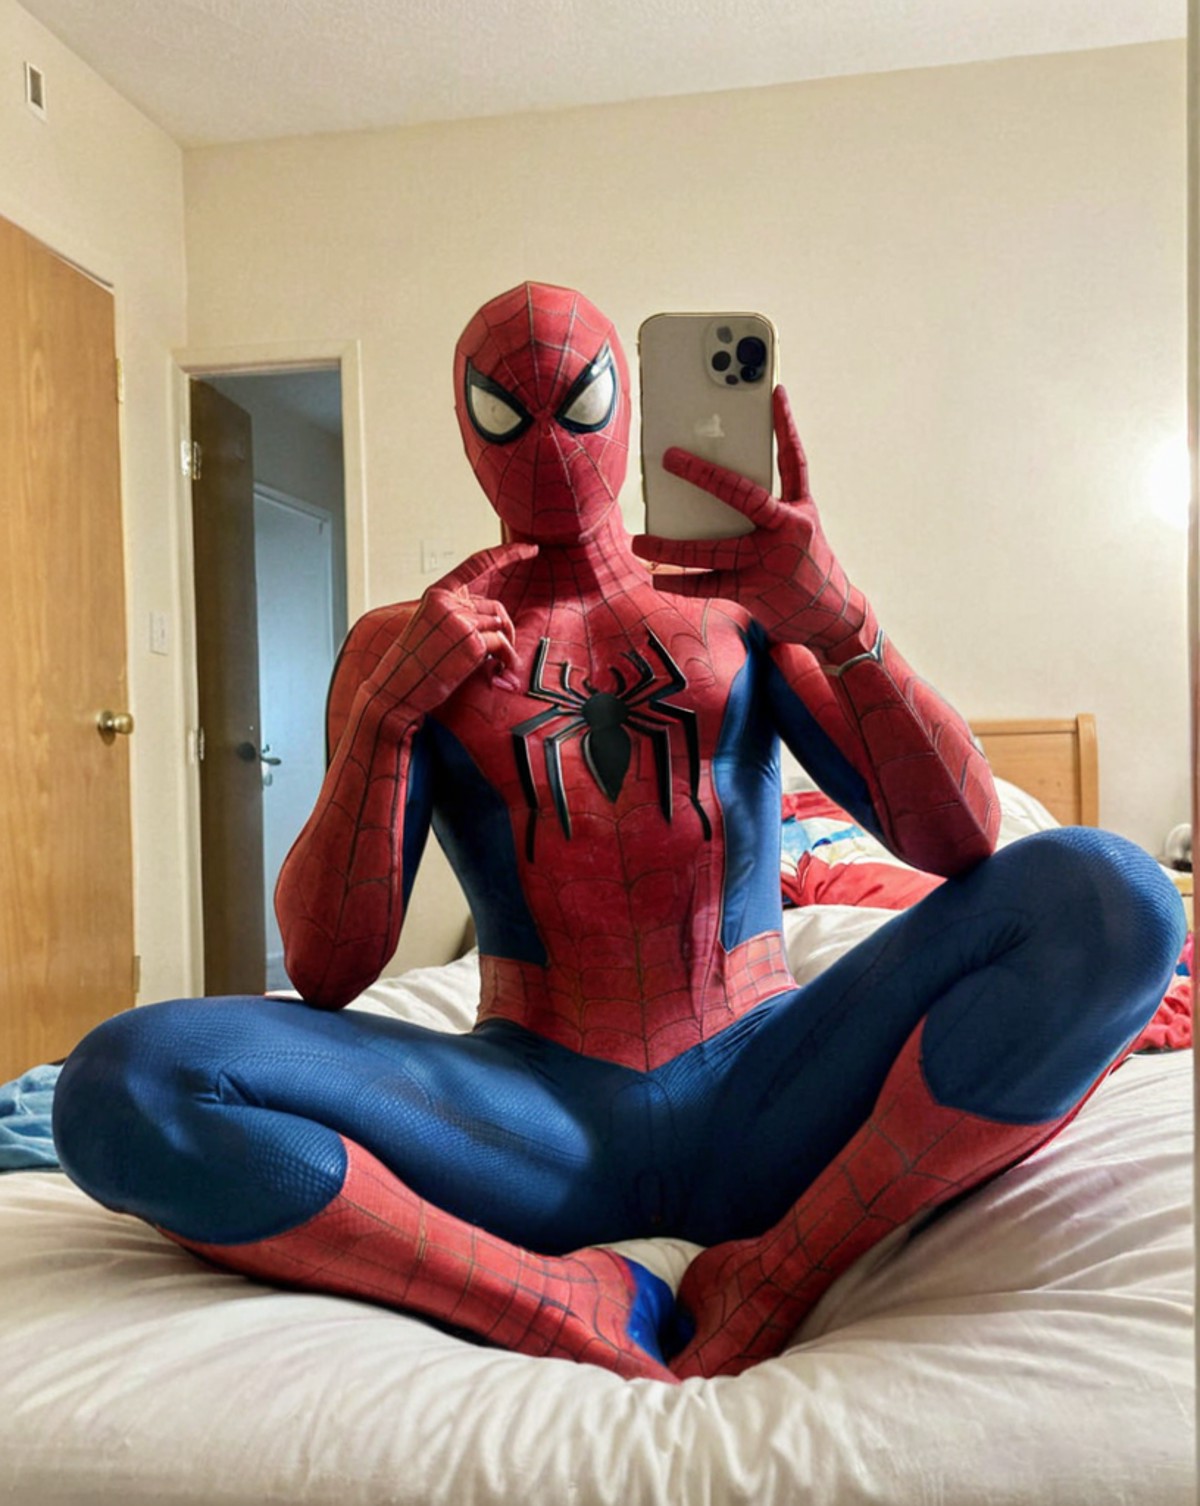 <lora:iphone_mirror_selfie_v01b:1>
((very grainy low resolution amateur:1.2))
 iphone mirror selfie
spiderman holding ipho...